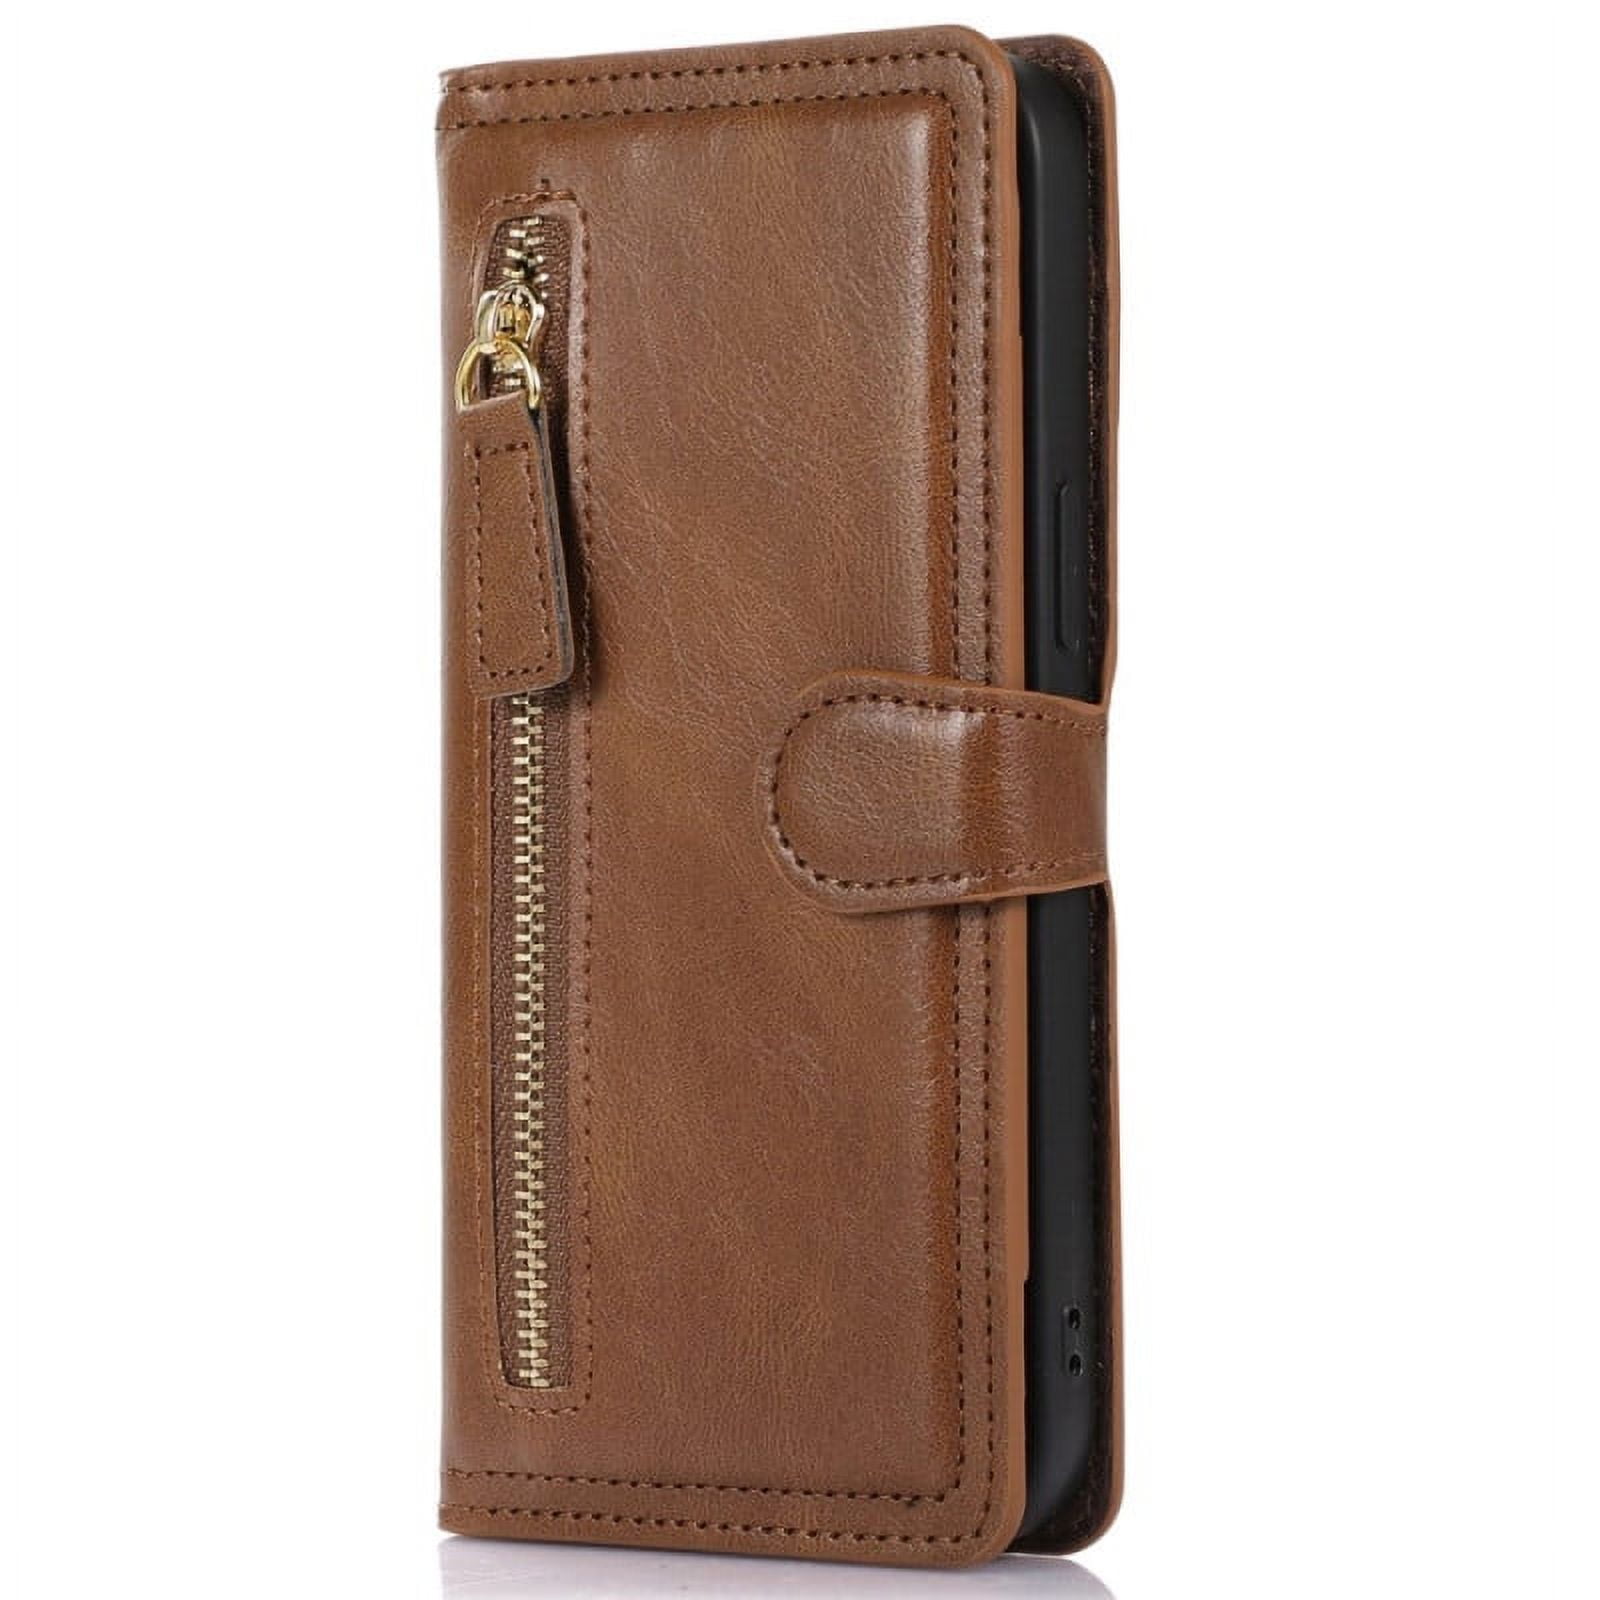 iPhone SE 2 / 3 Gen Leather Wallet Case Cover Card Holder for